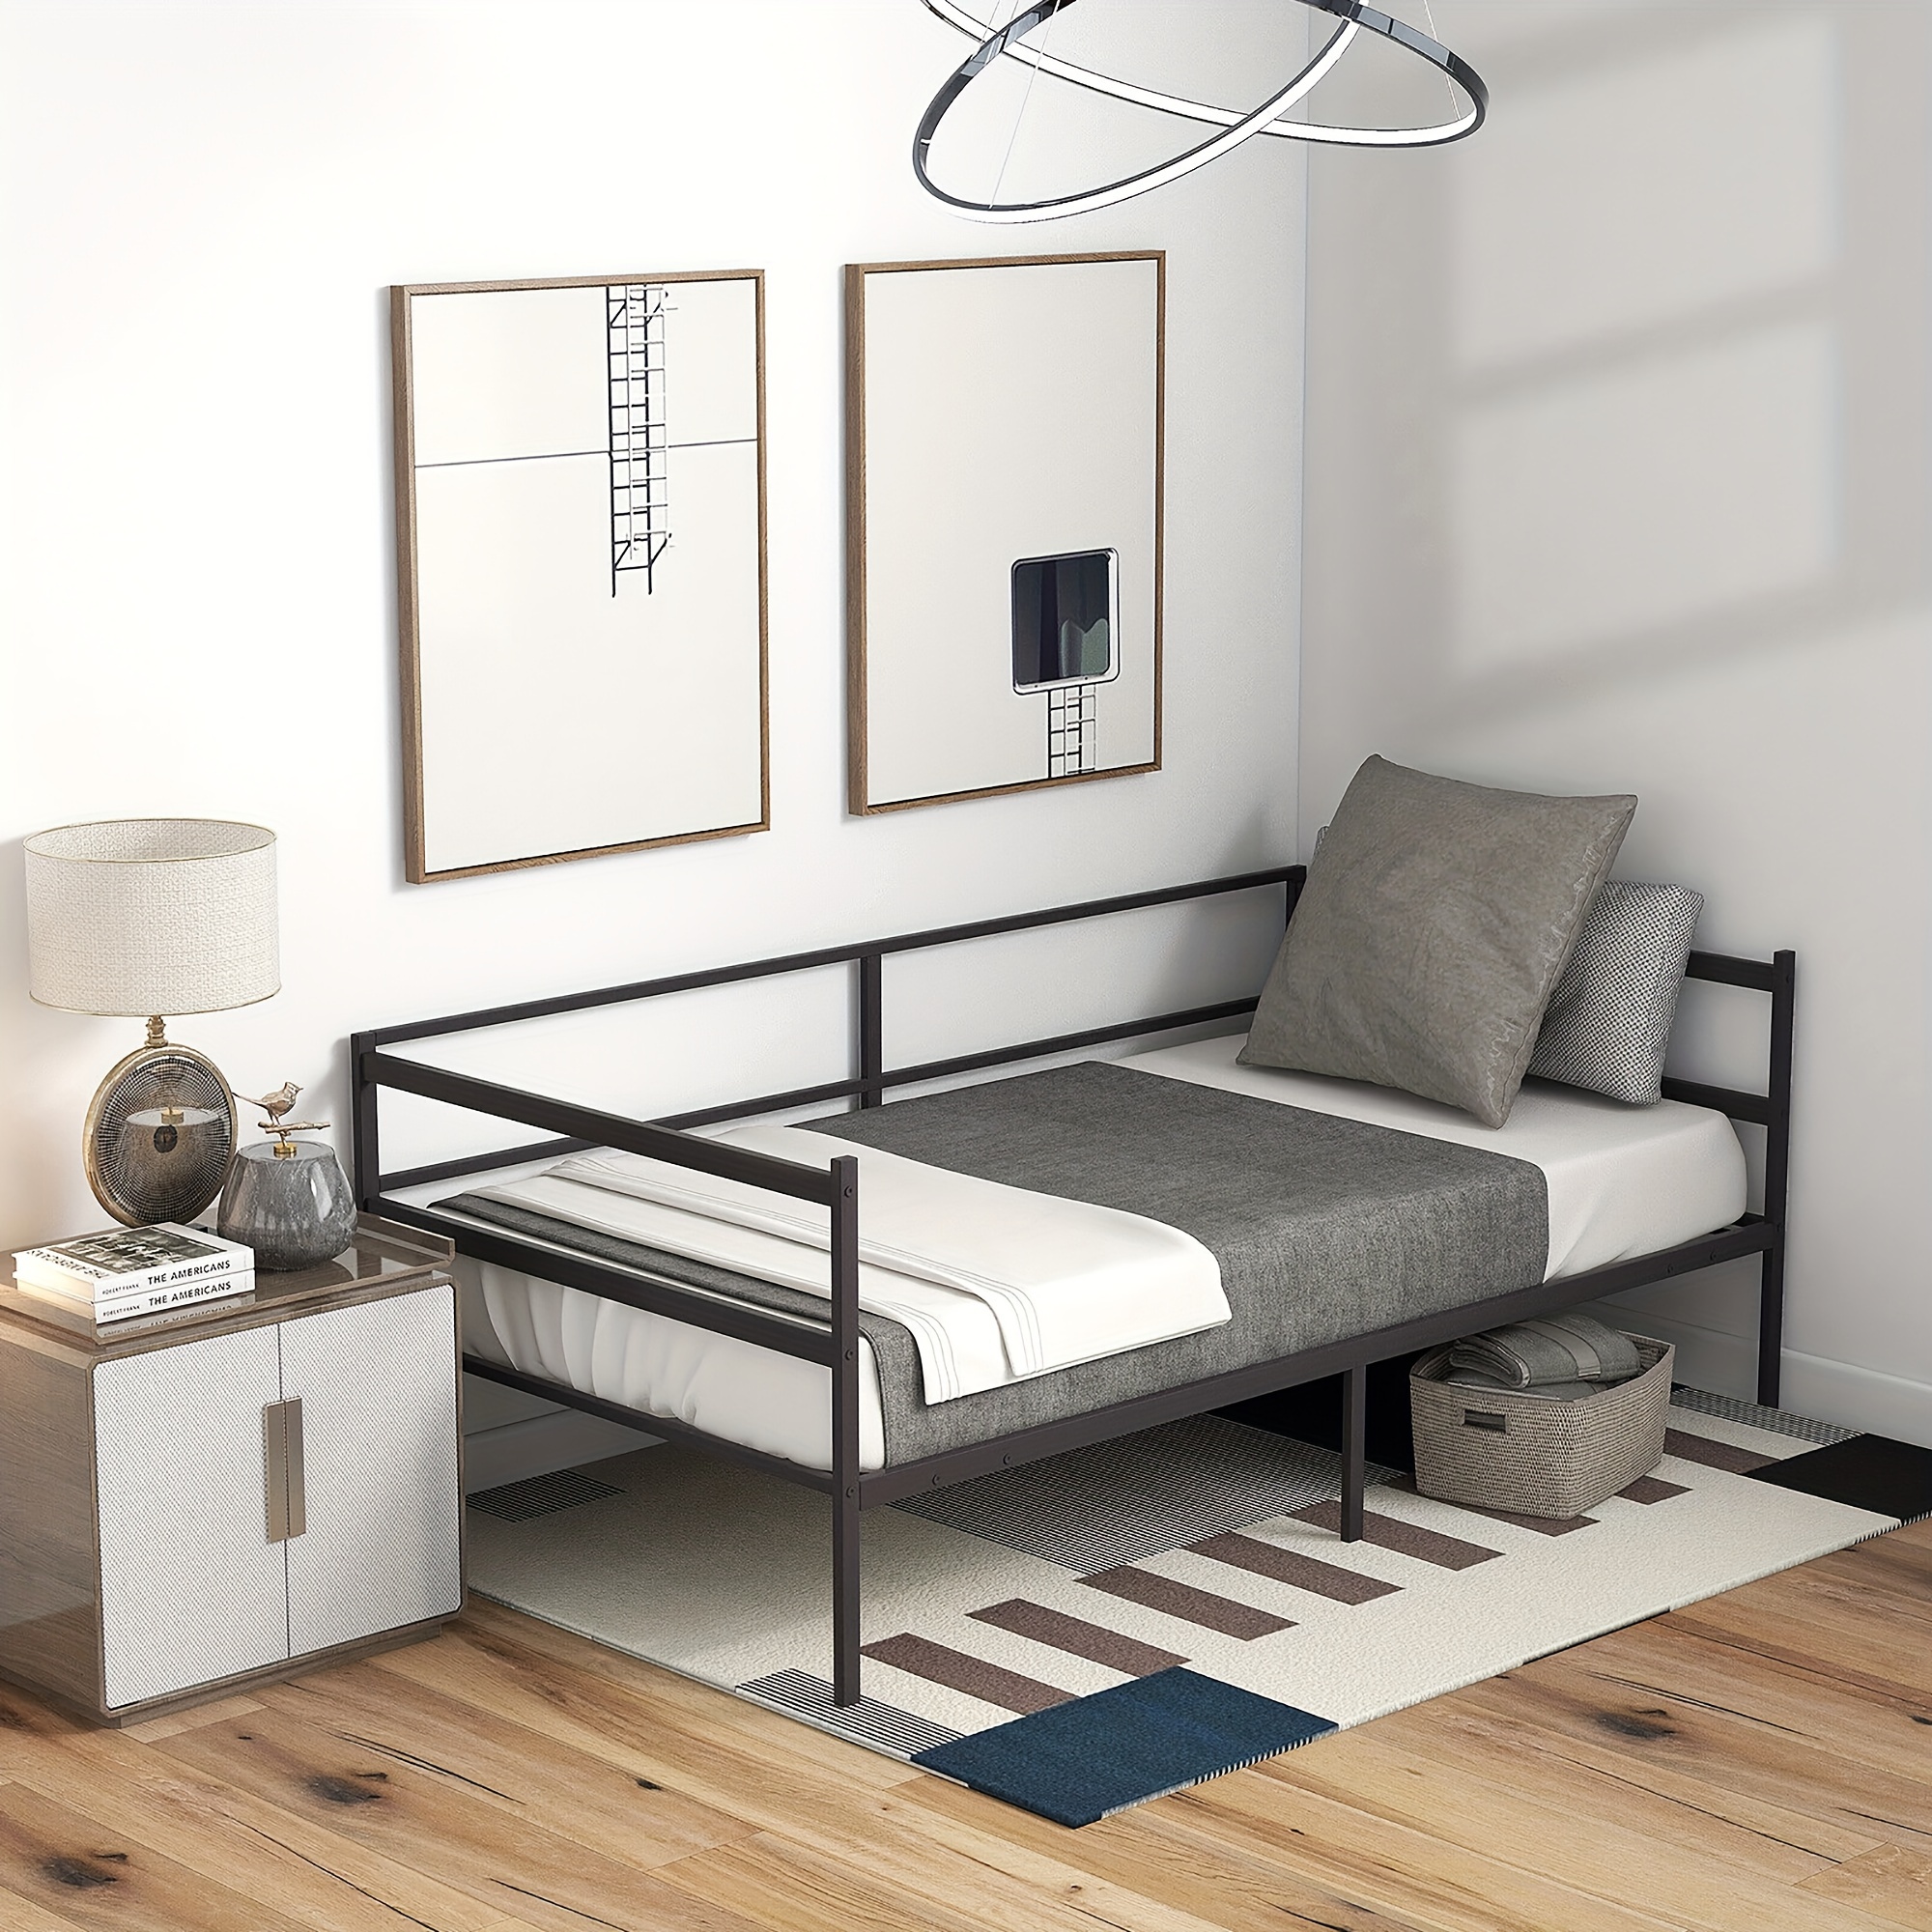 

Twin Metal Daybed Frame Dual-use Platform Sofa Bed, For Living Room Bedroom